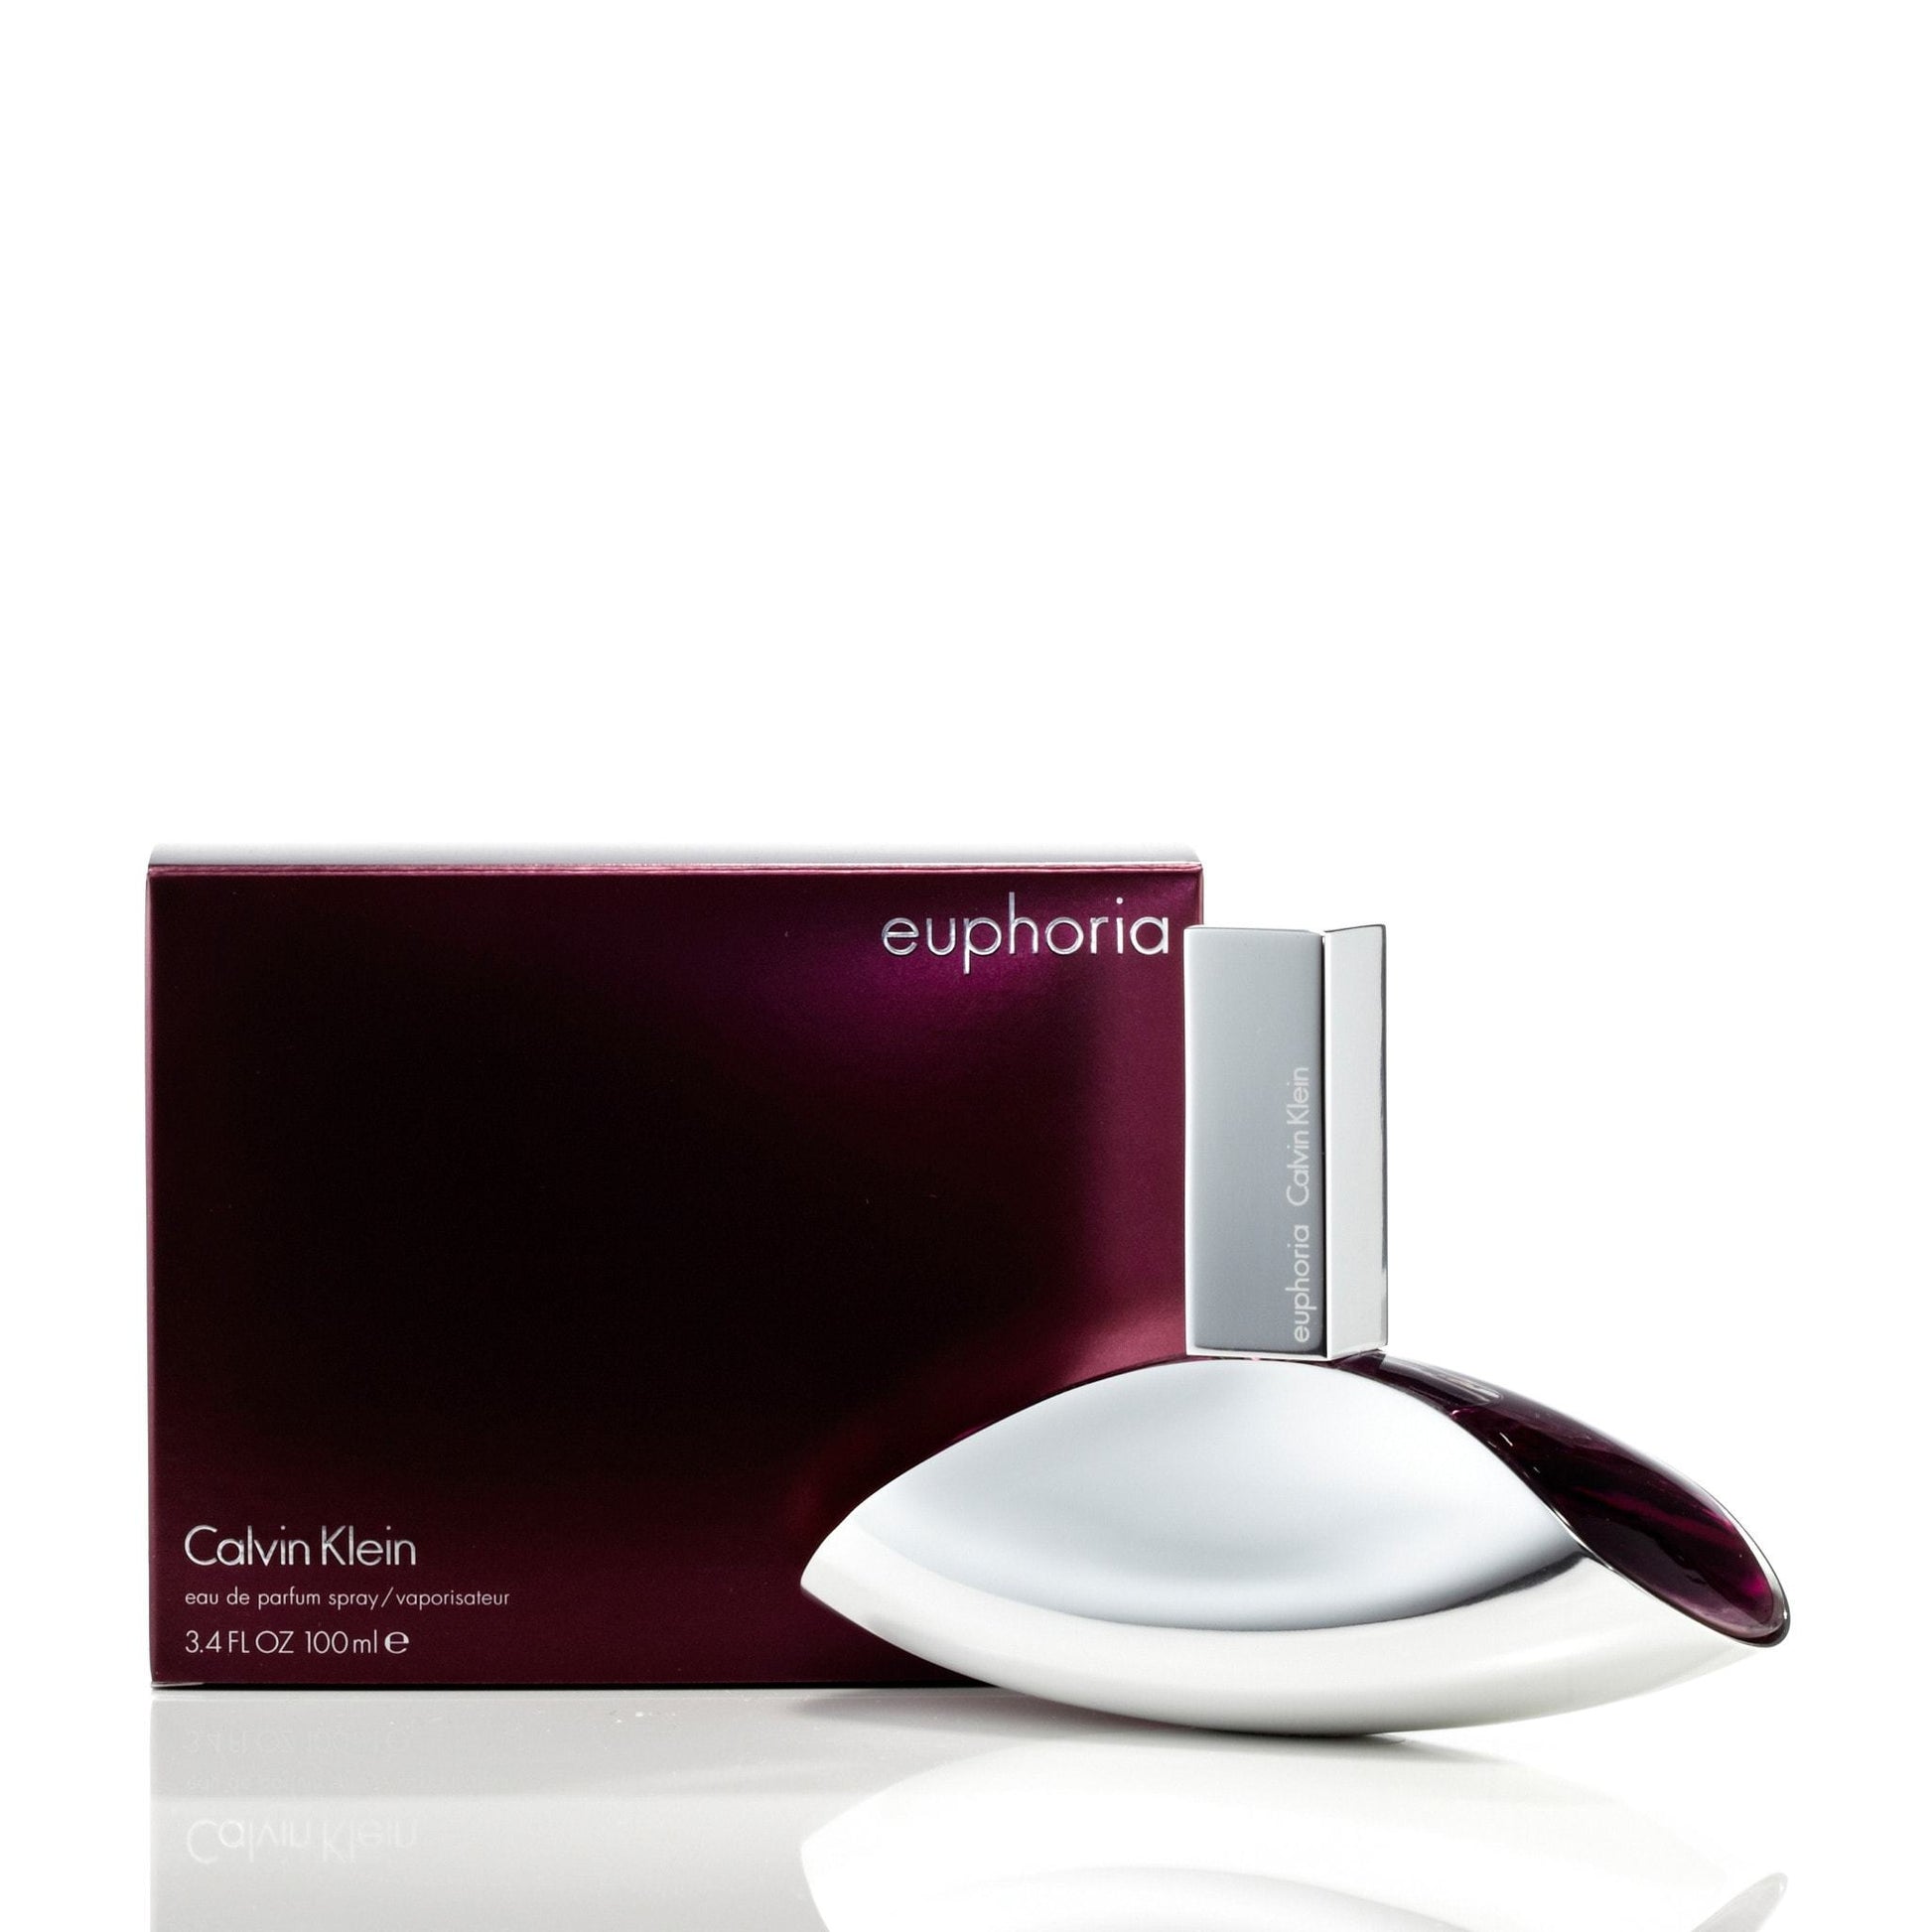 Euphoria Eau de Parfum Spray for Women by Calvin Klein, Product image 6